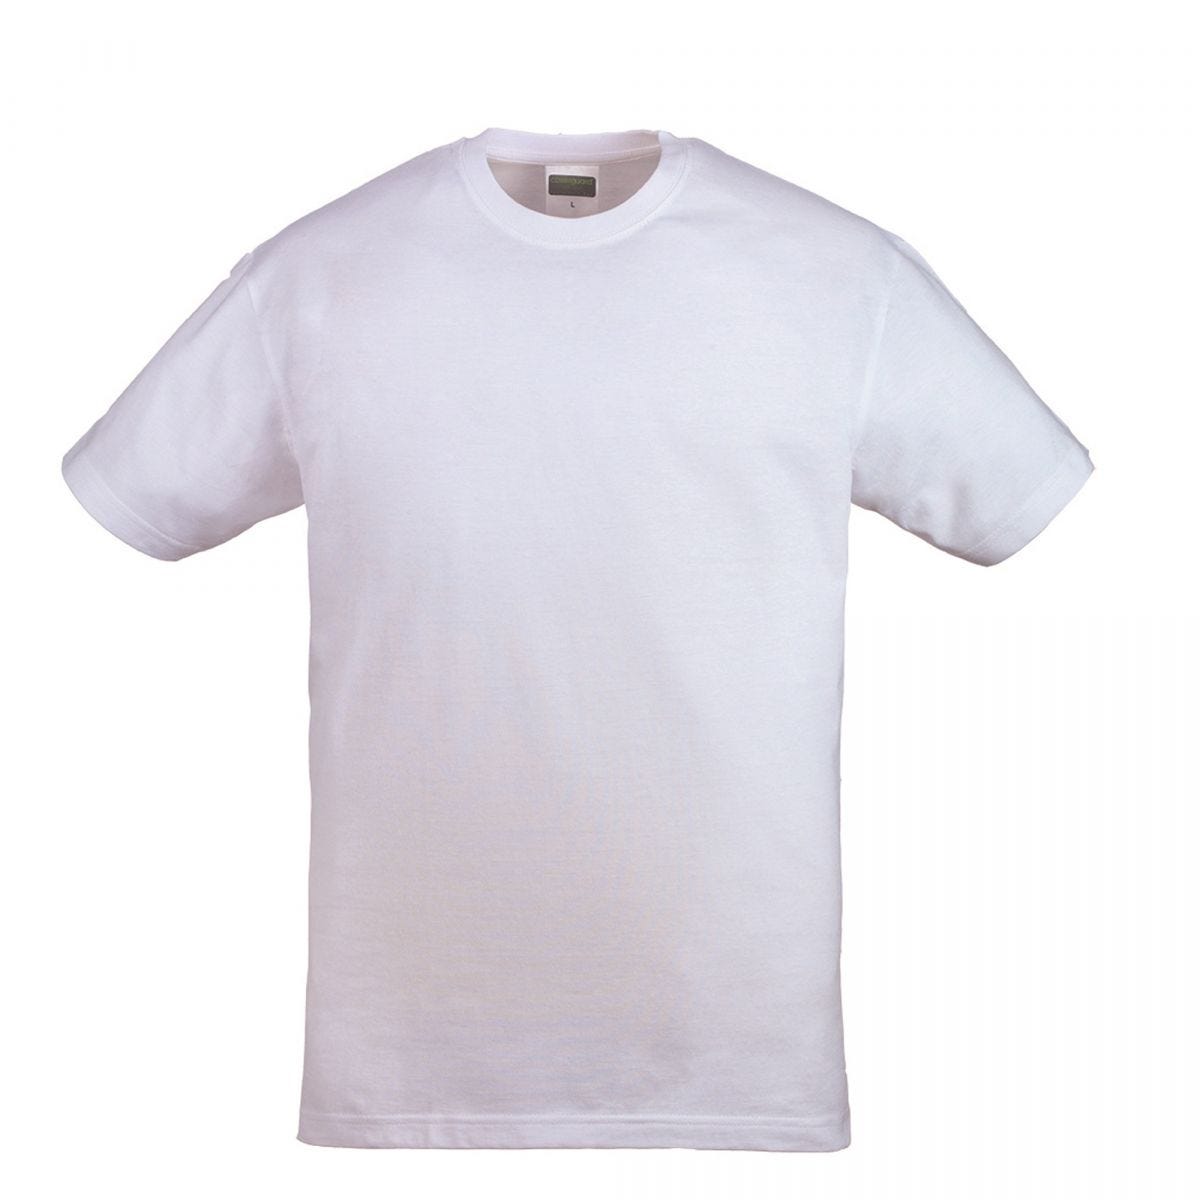 HIKE T-shirt MC blanc, 100% coton, 190g/m² - COVERGUARD - Taille M 0